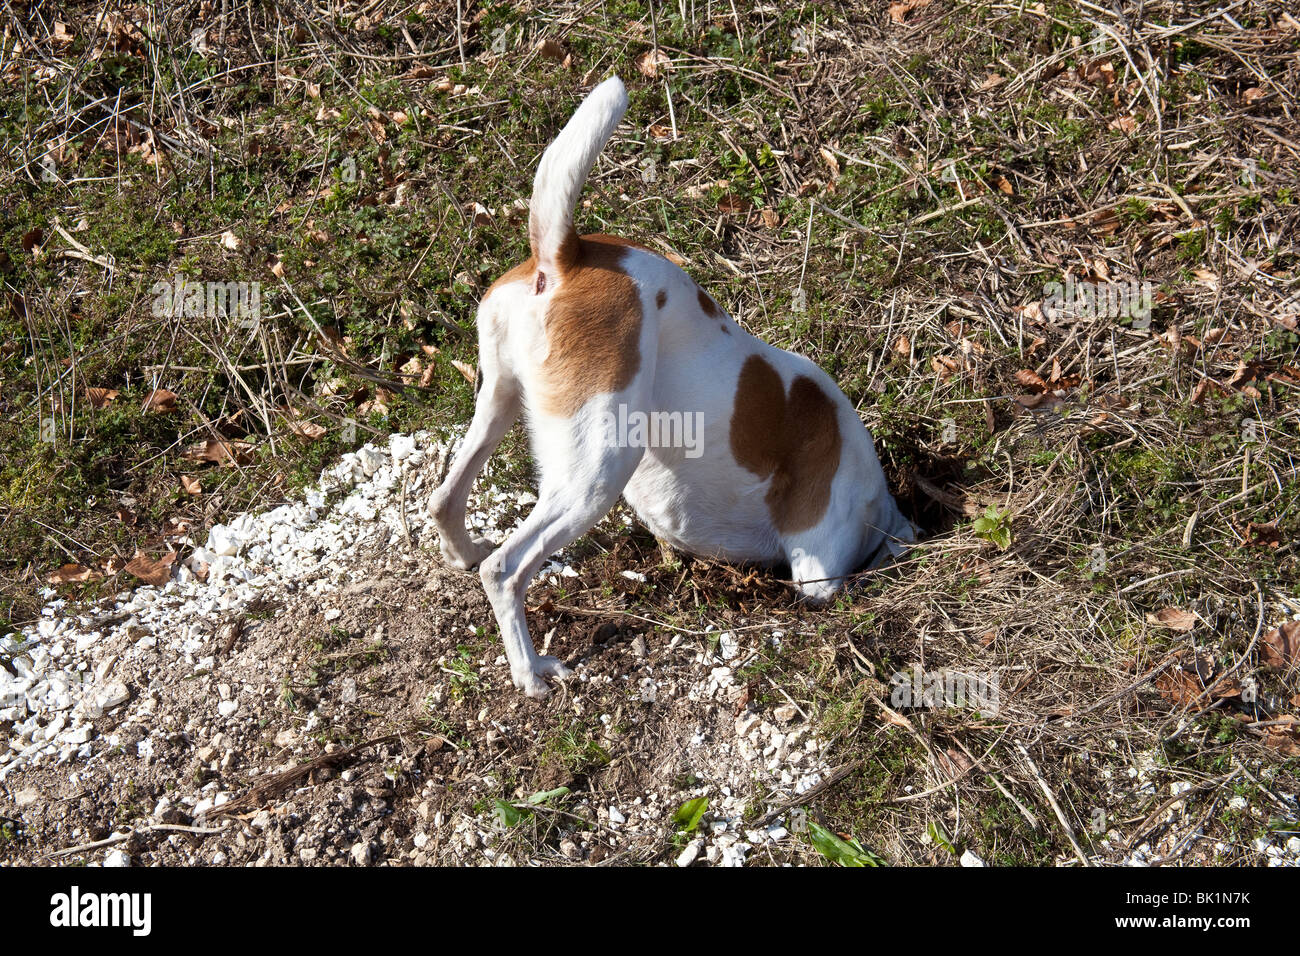 White and tan mongrel farm dog investigating a rabbit hole, Hampshire, England. Stock Photo